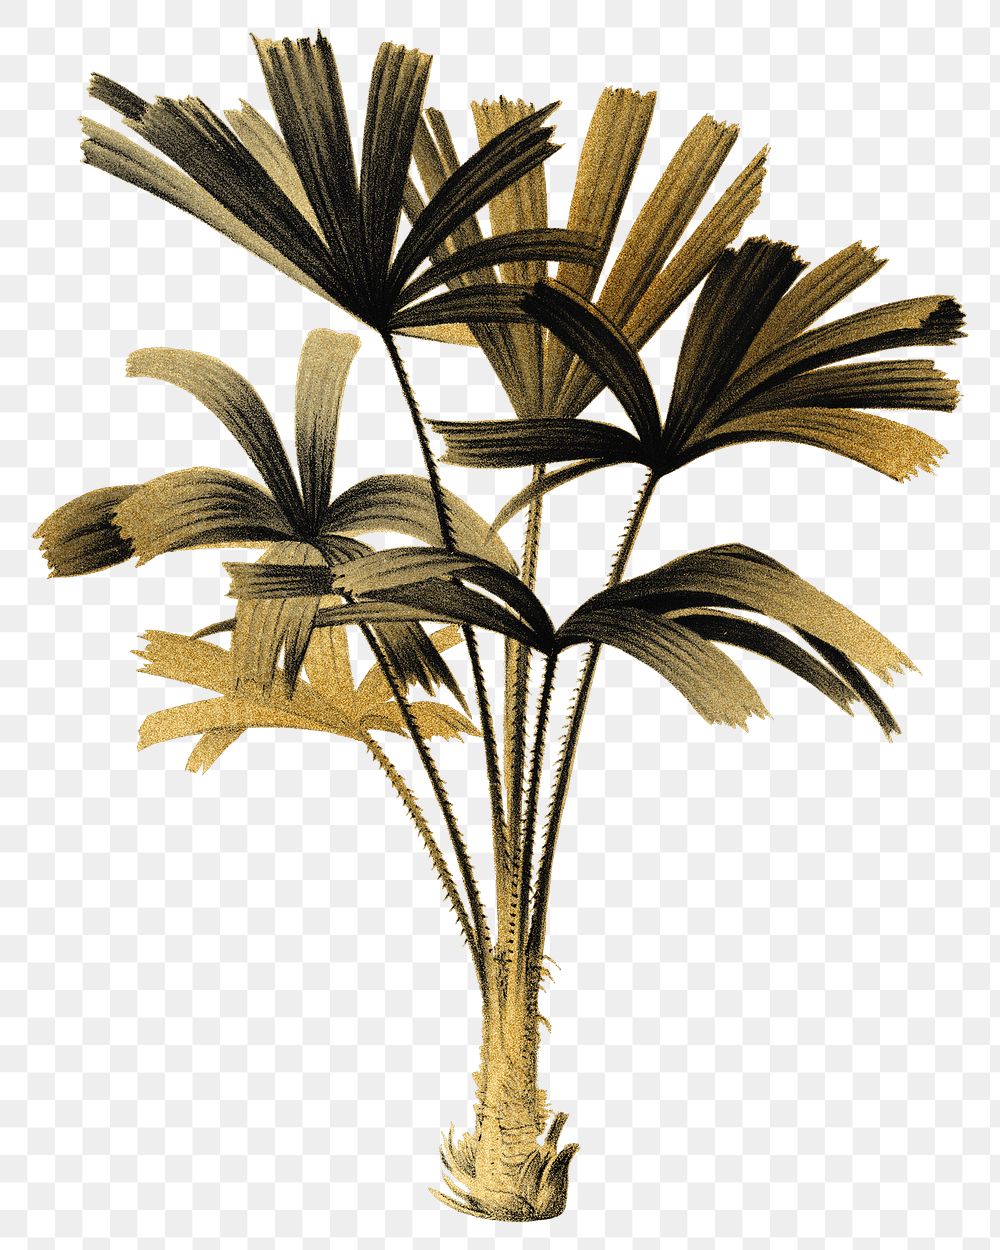 PNG gold mangrove fan palm sticker, transparent background